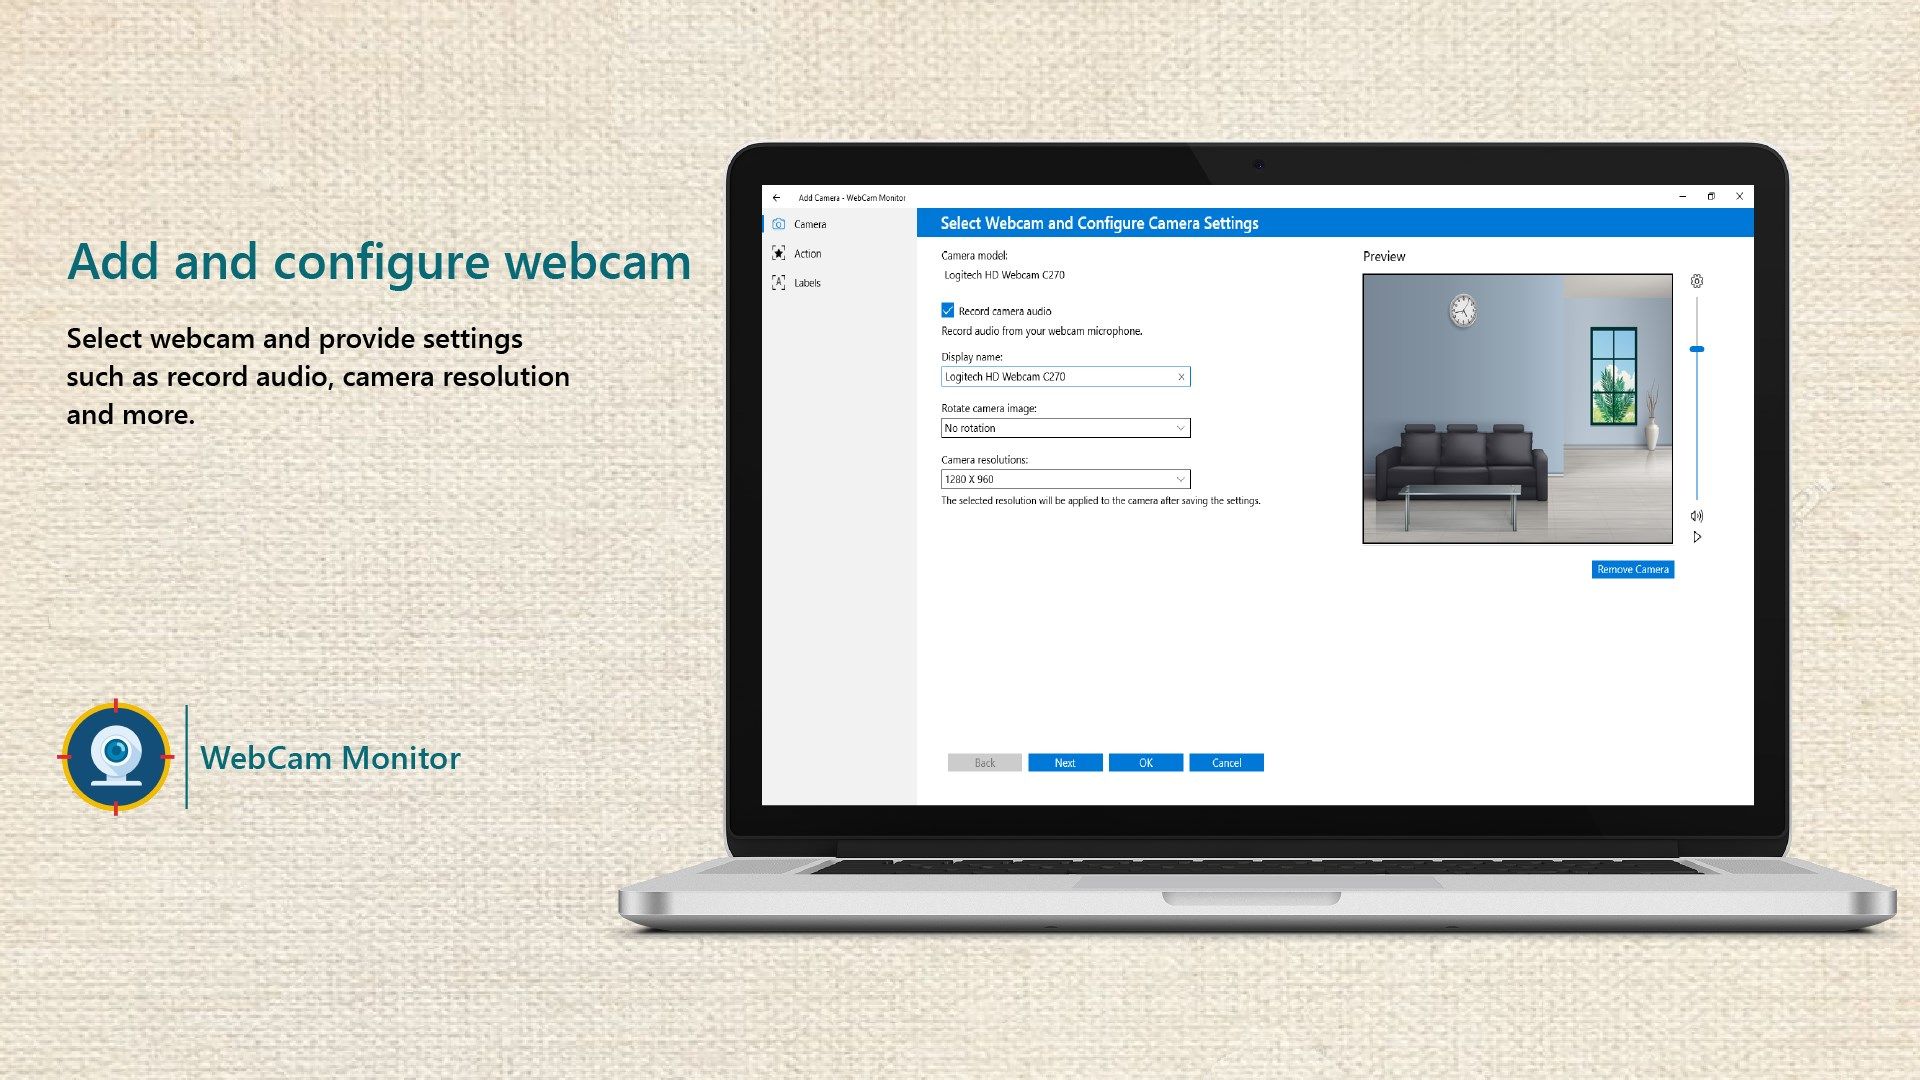 Configure webcam settings